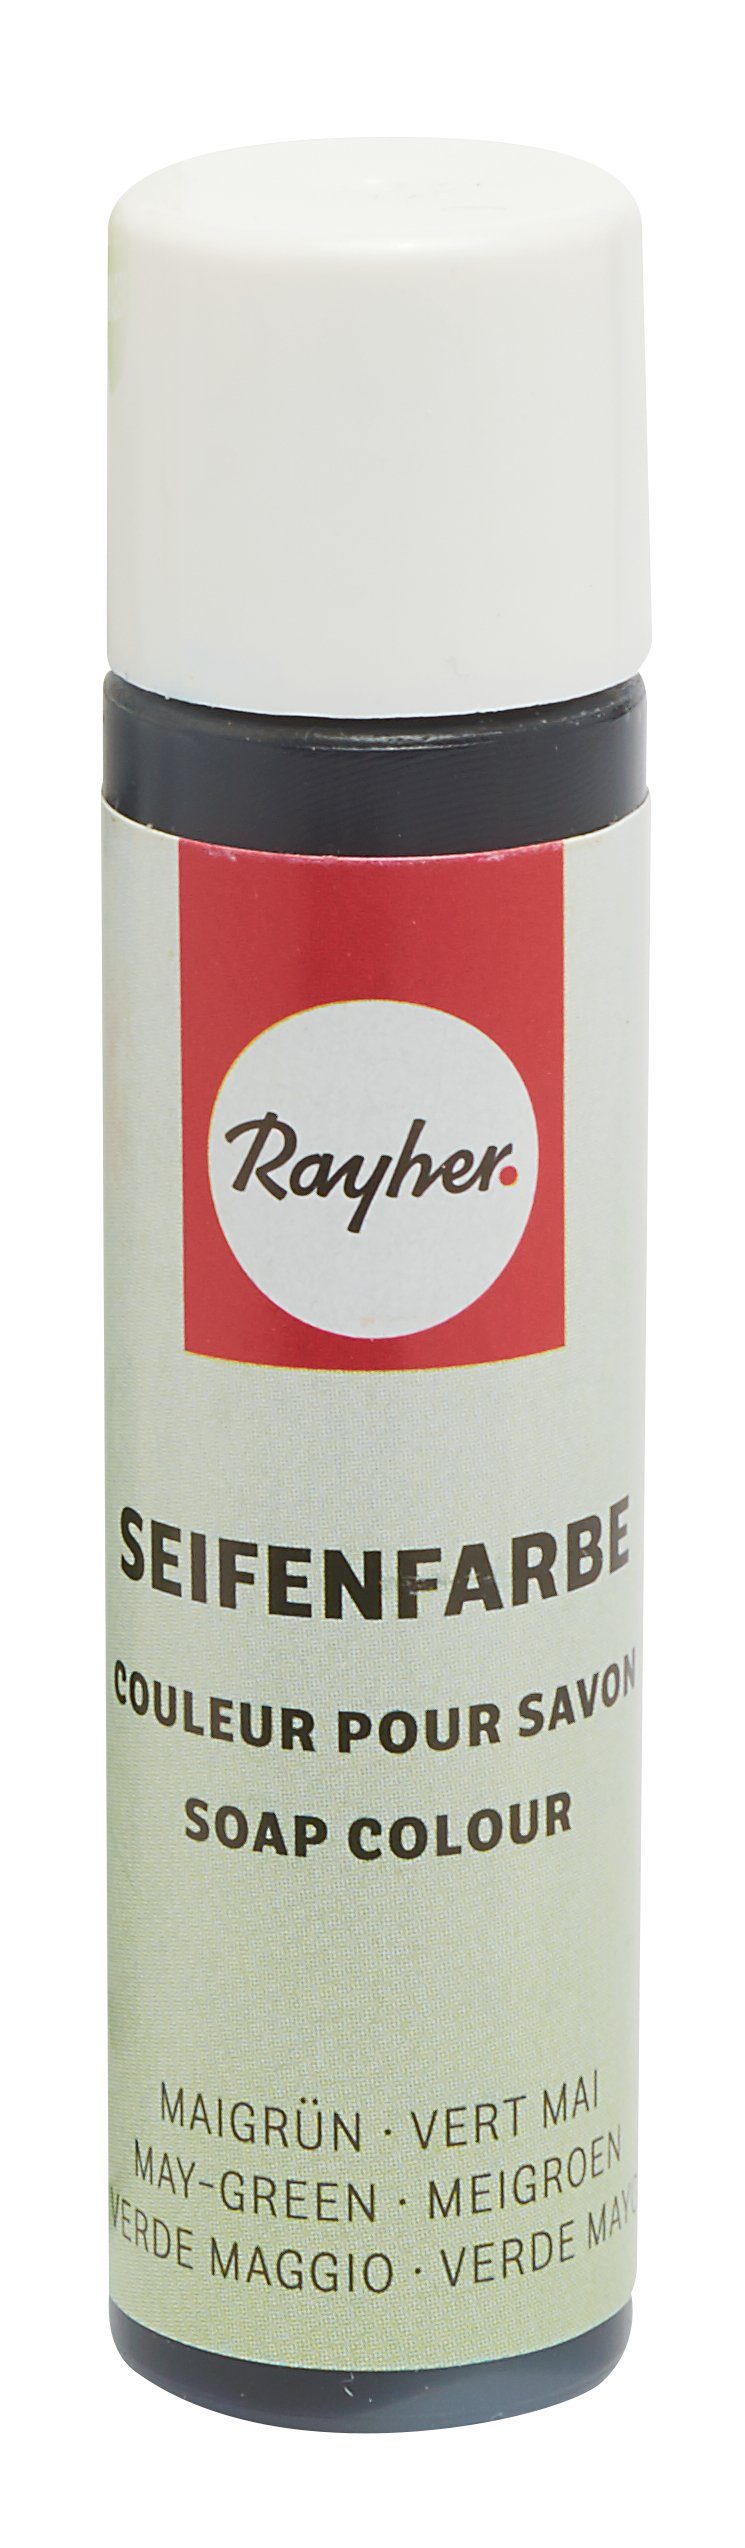 Badefarben 10 ml Maigrün Seifenfarbe, Rayher